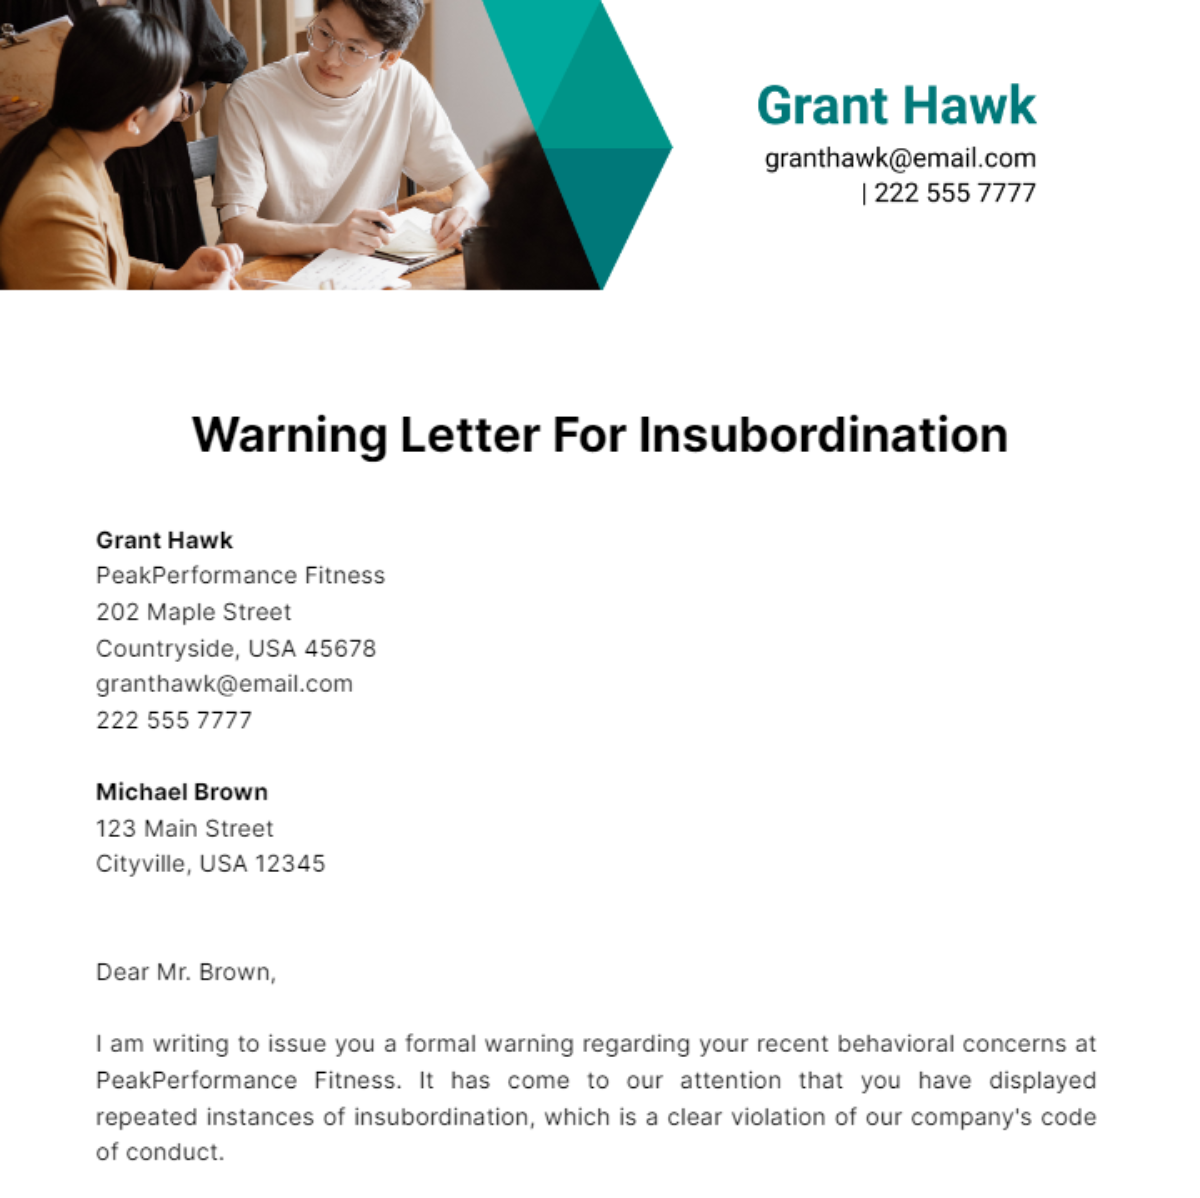 Warning Letter For Insubordination Template